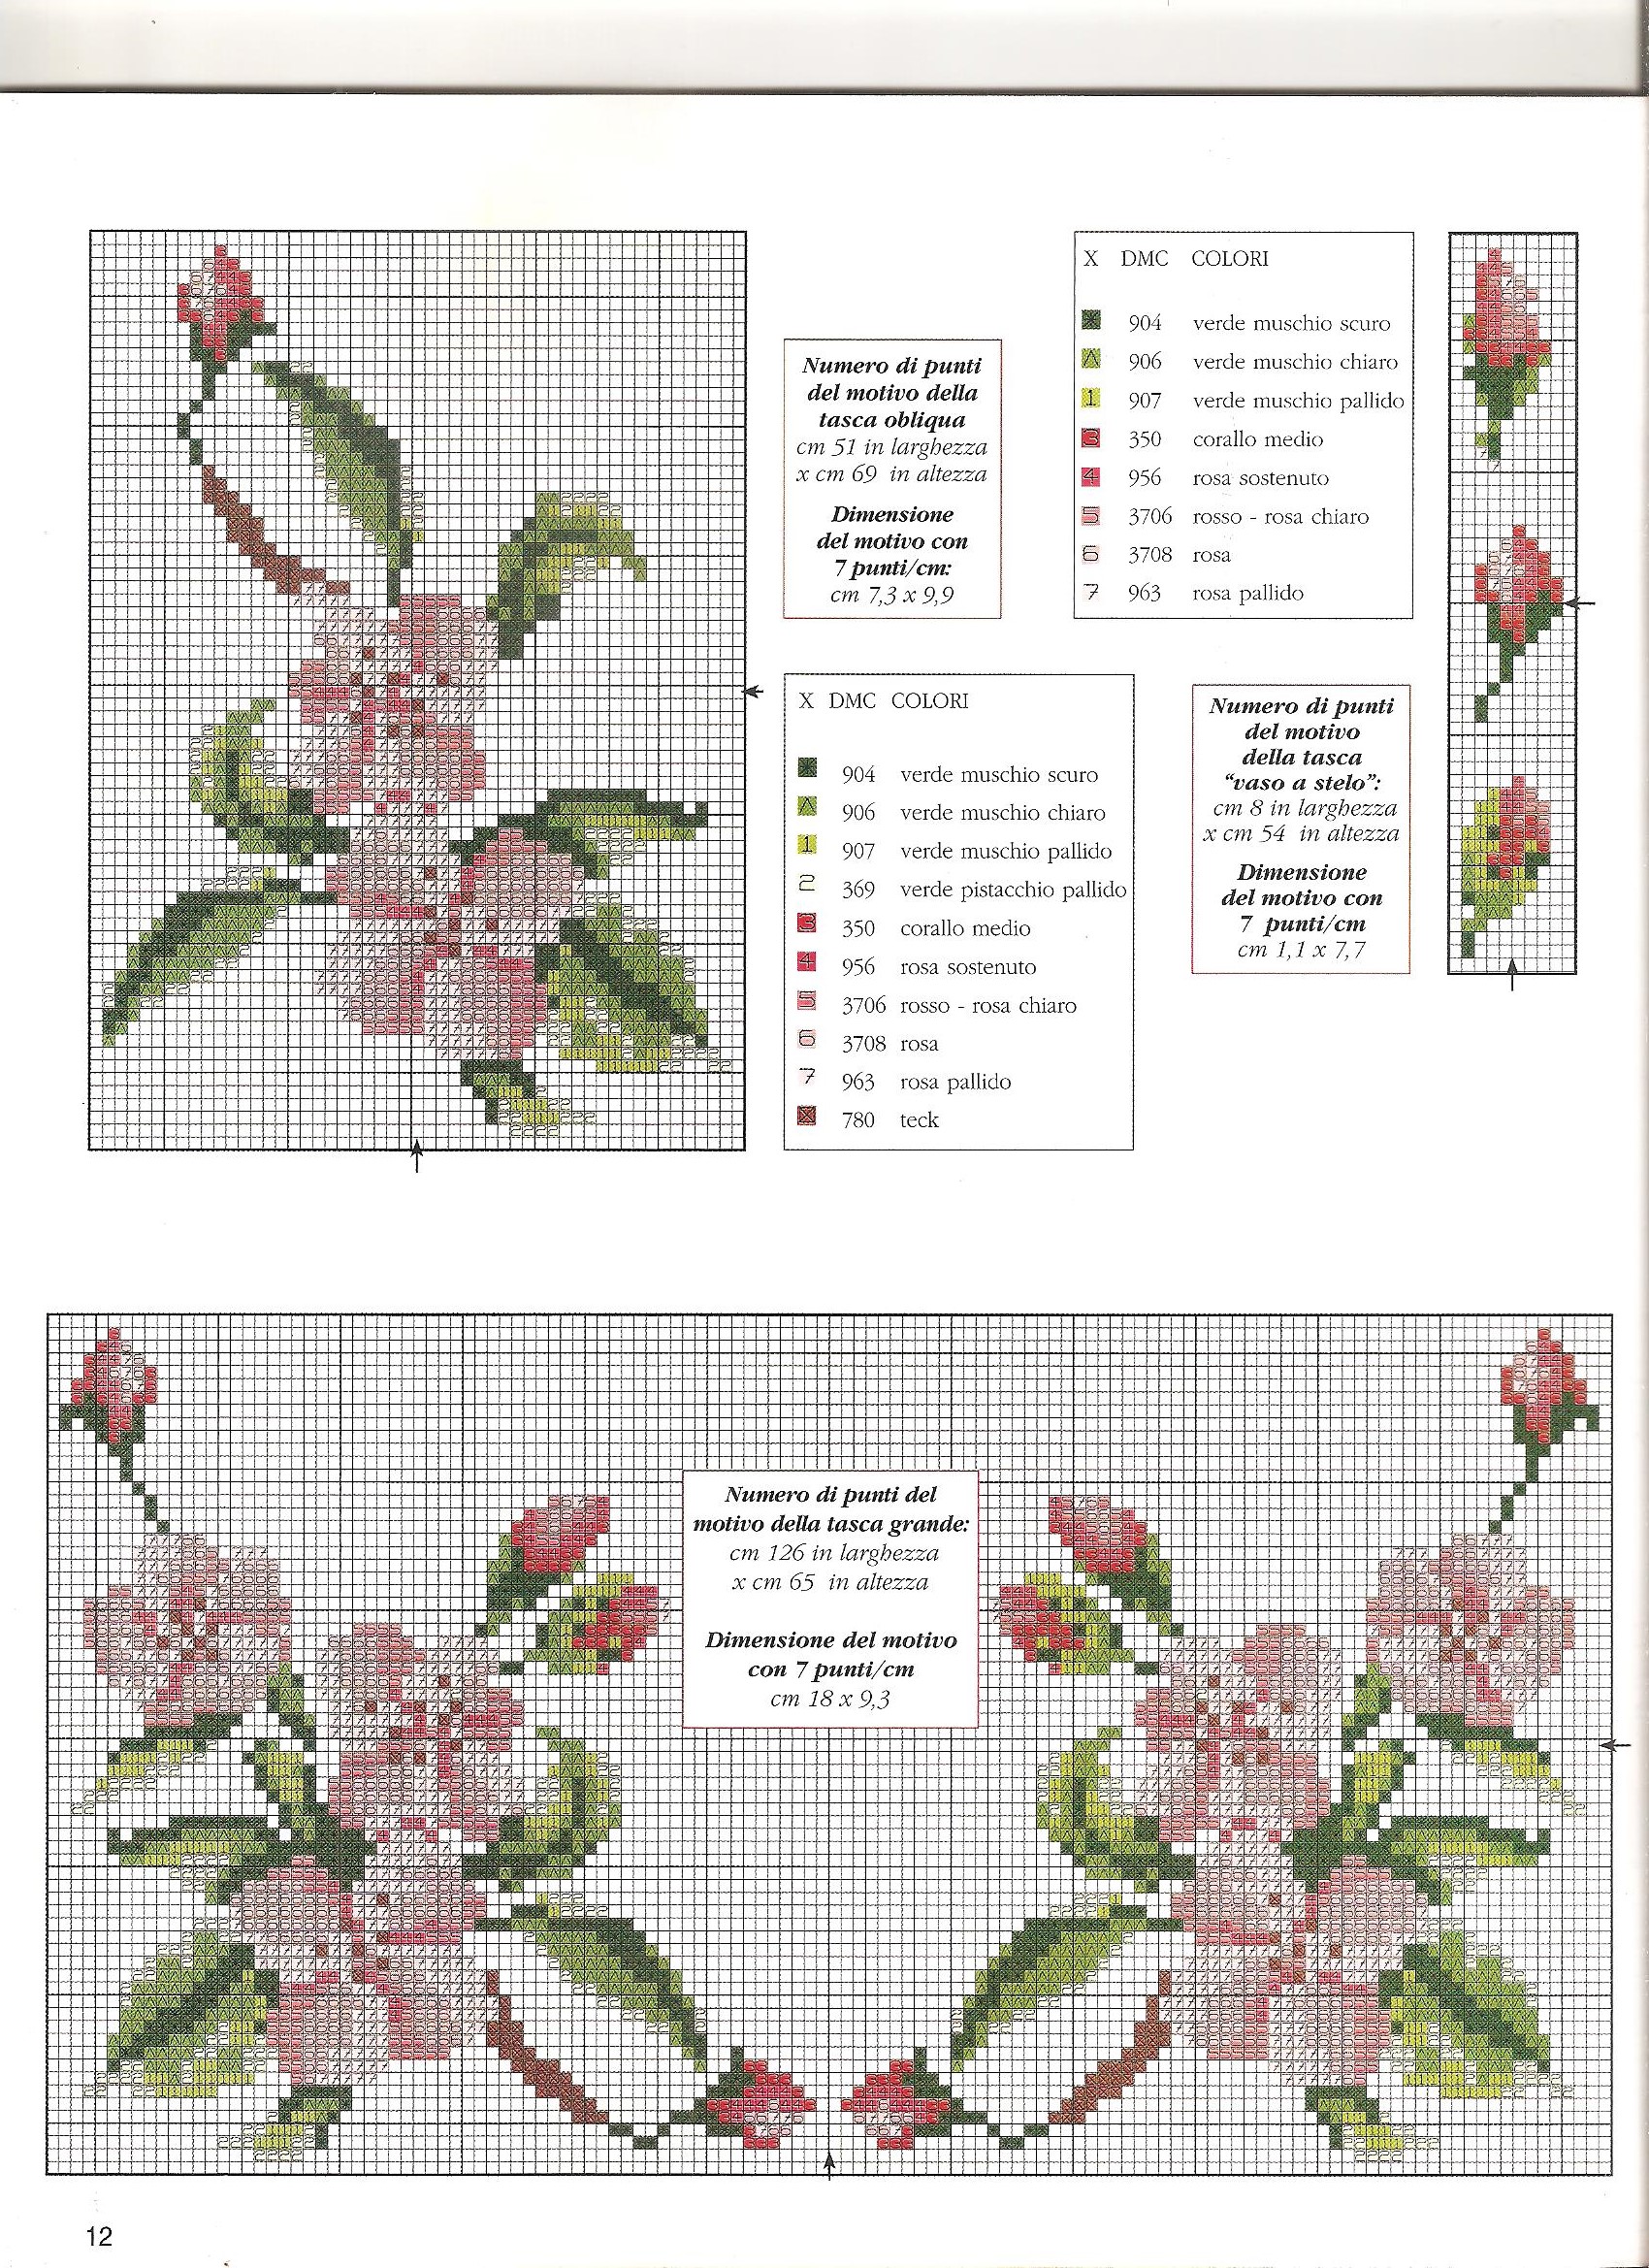 Hawthorns flowers cross stitch pattern (3)